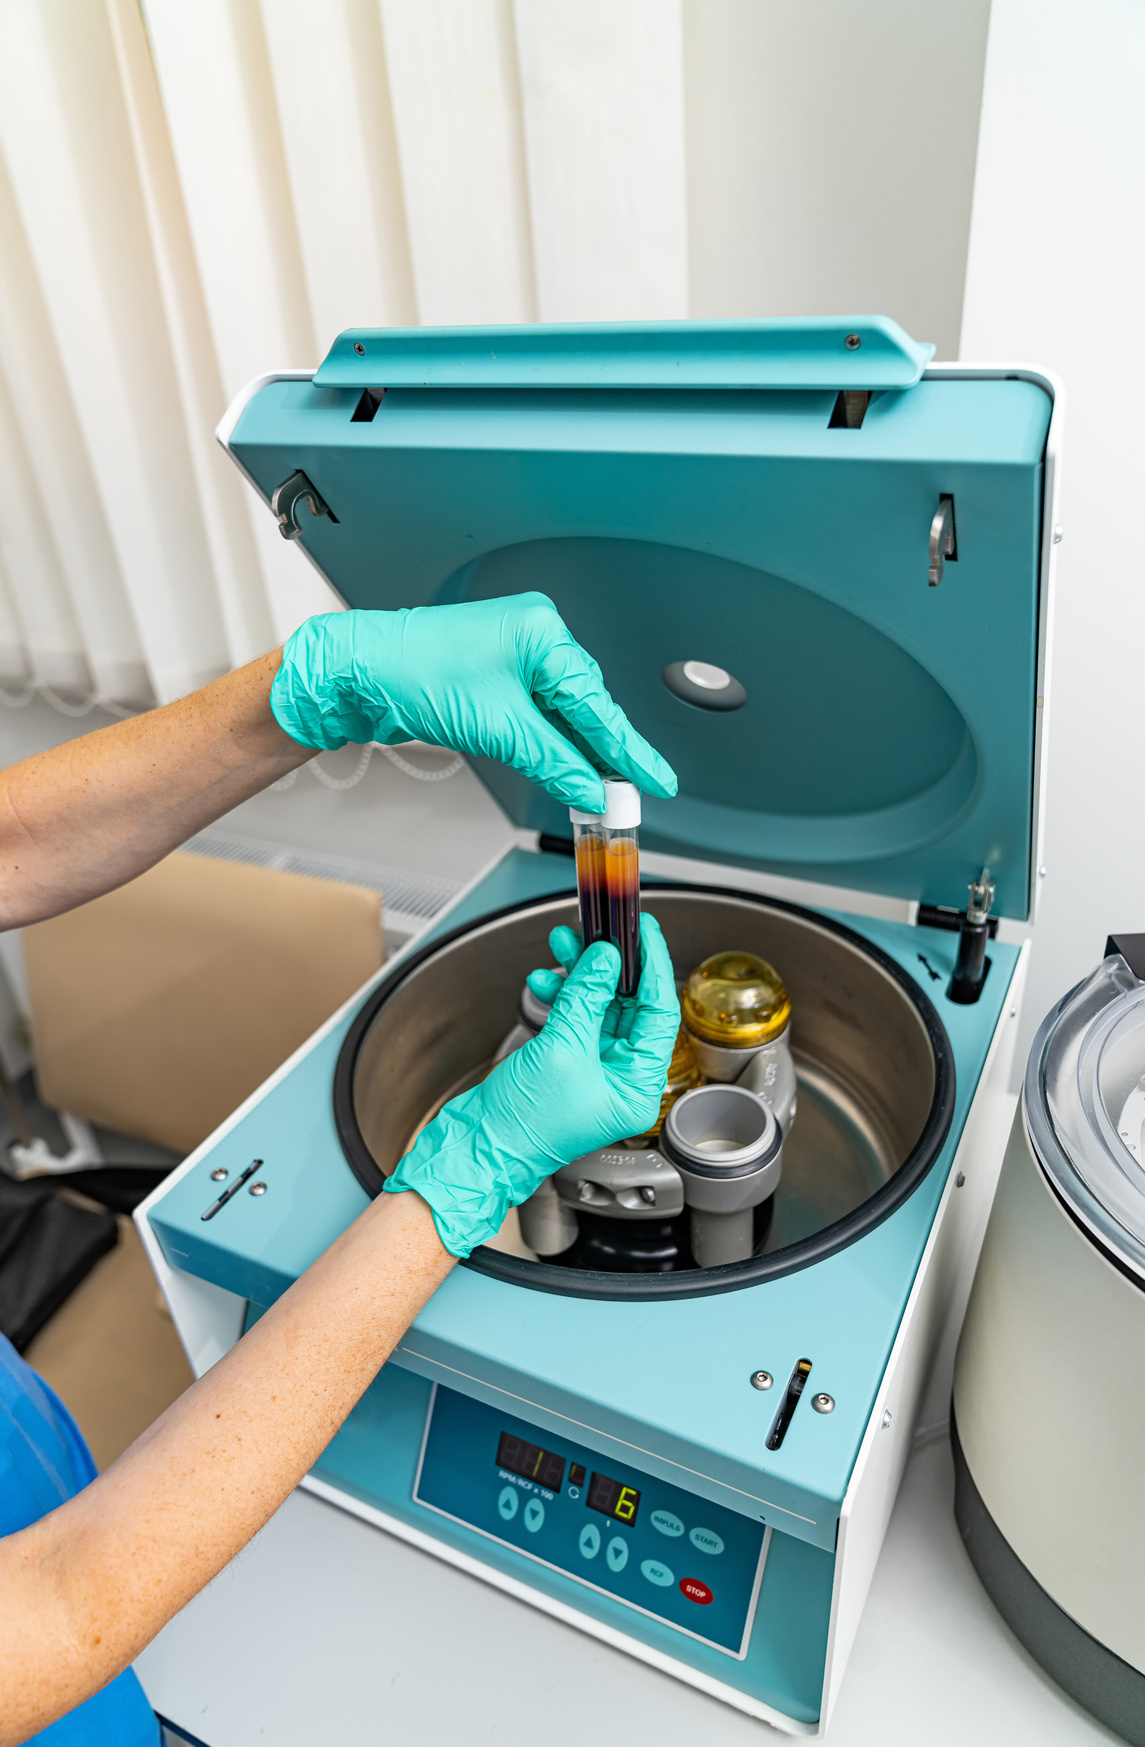 Plasma platelet rich centrifuge preparation. Biochemistry plasma experiment.